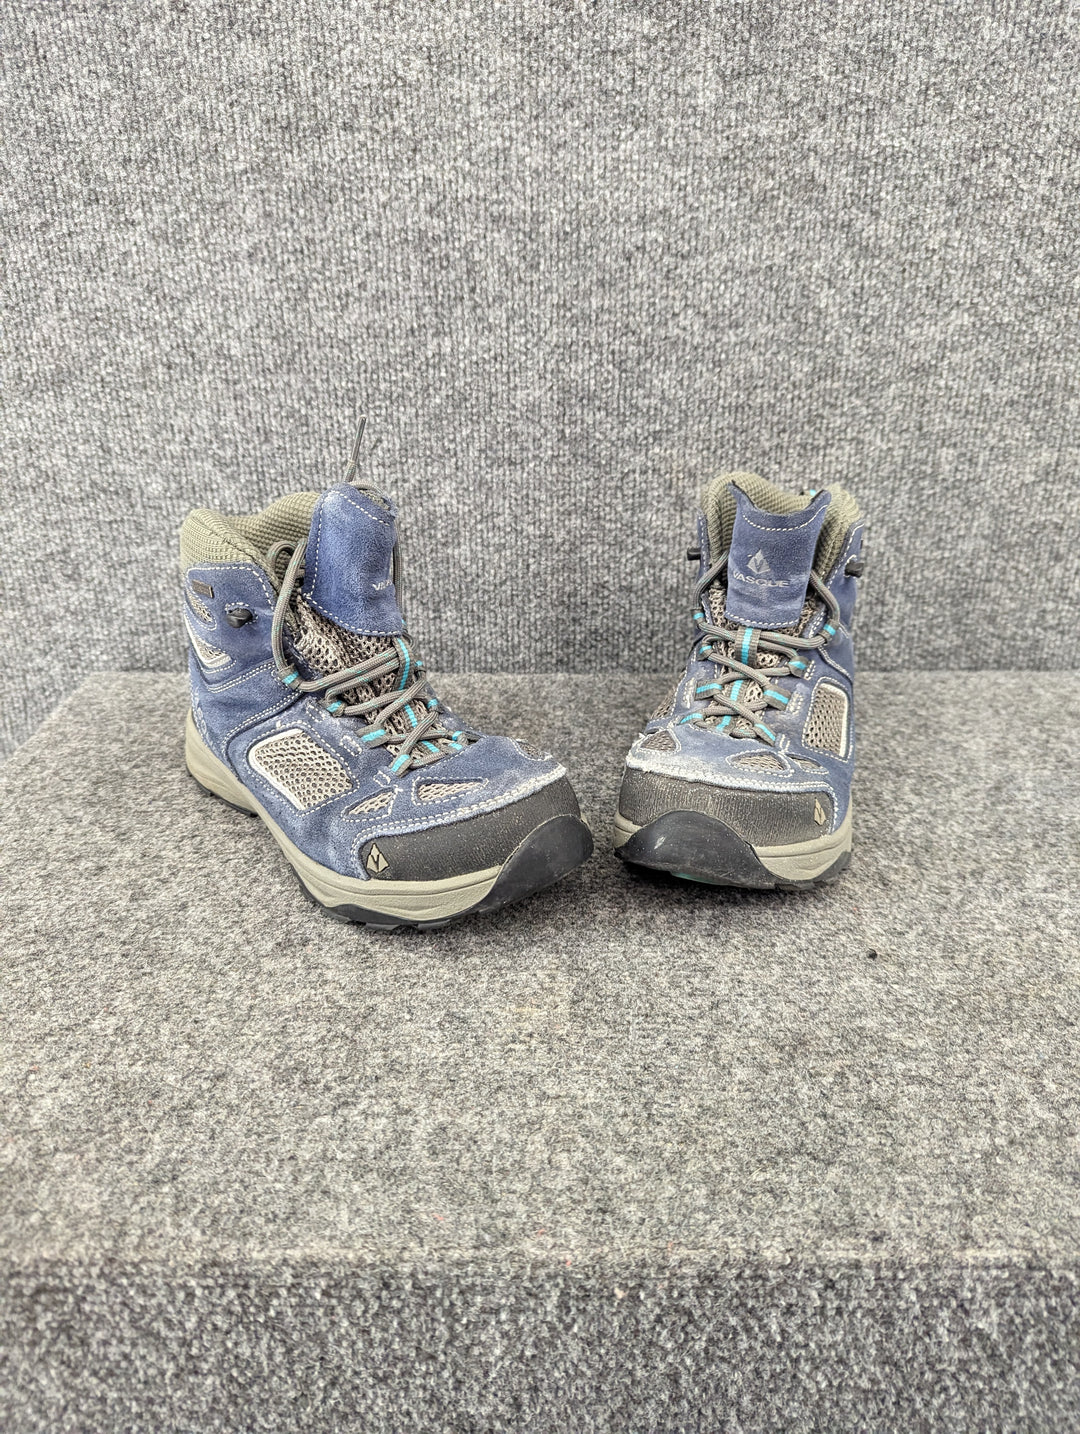 Vasque Size 5/36.5 Women's Hiking Boots